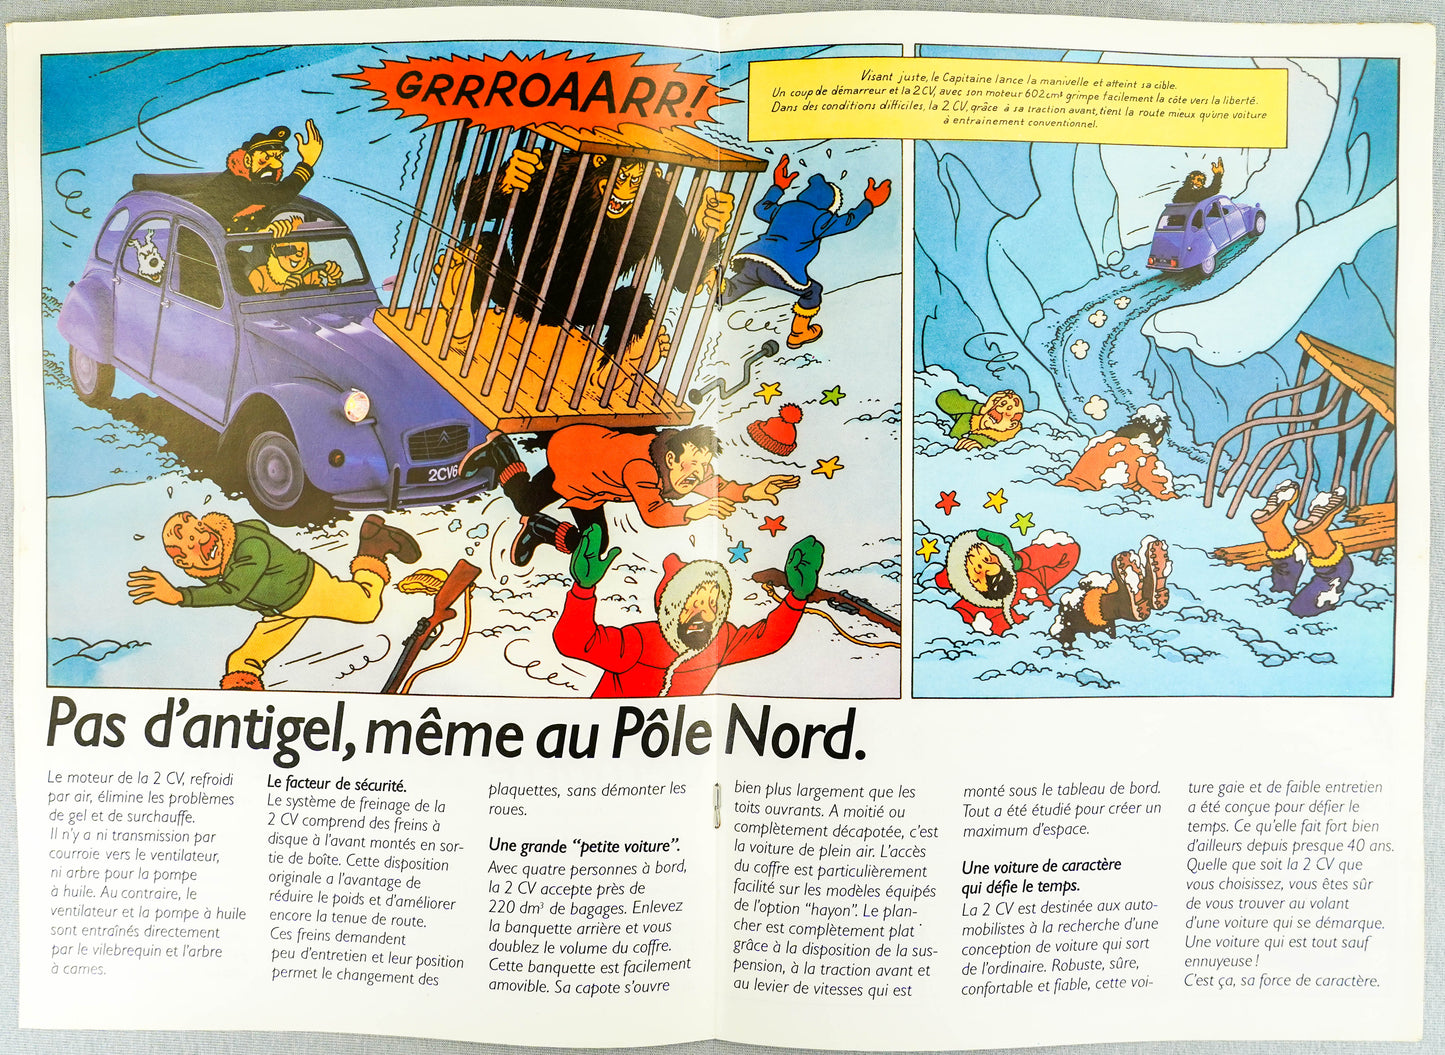 1986 Citroen Tintin Car Brochure: Aventures 2CV L'Homme Neiges by Herge Comic